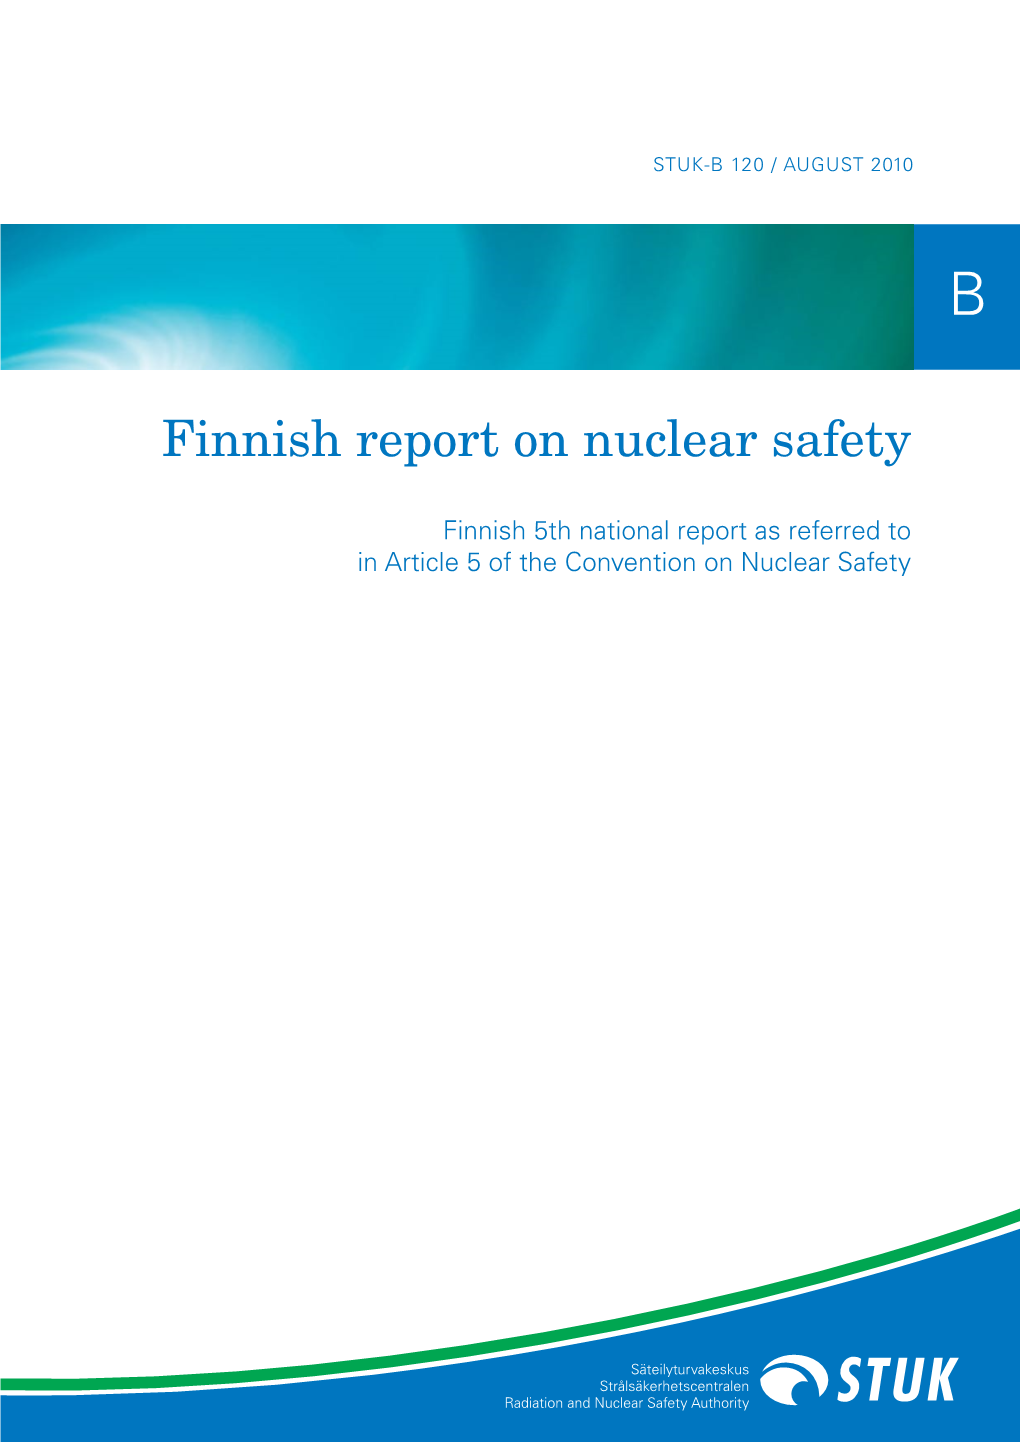 ANNEX 2 Finnish Nuclear Power Plants